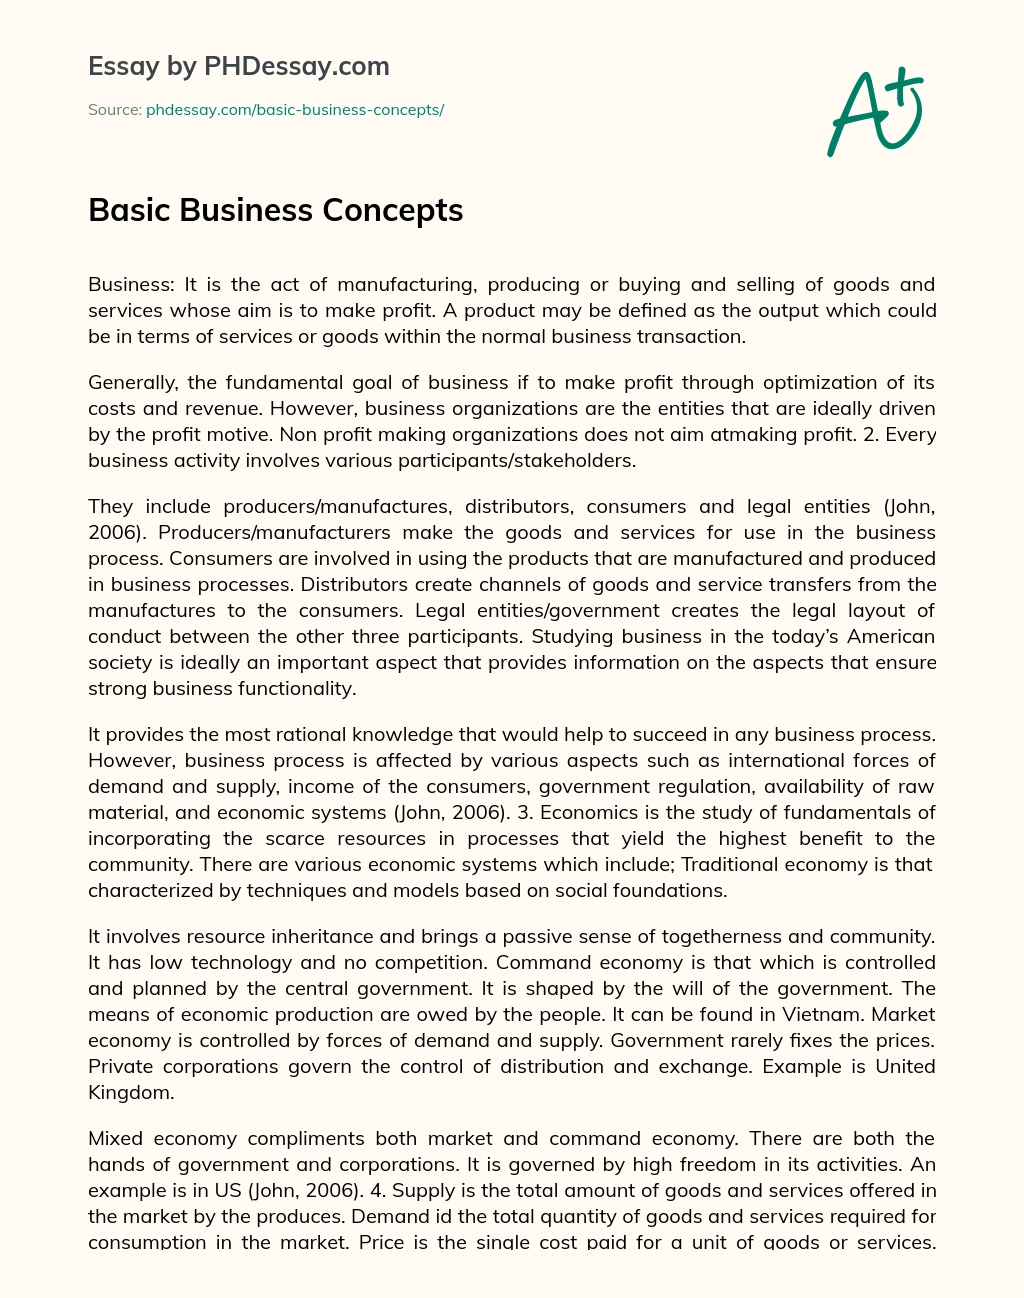 Basic Business Concepts essay